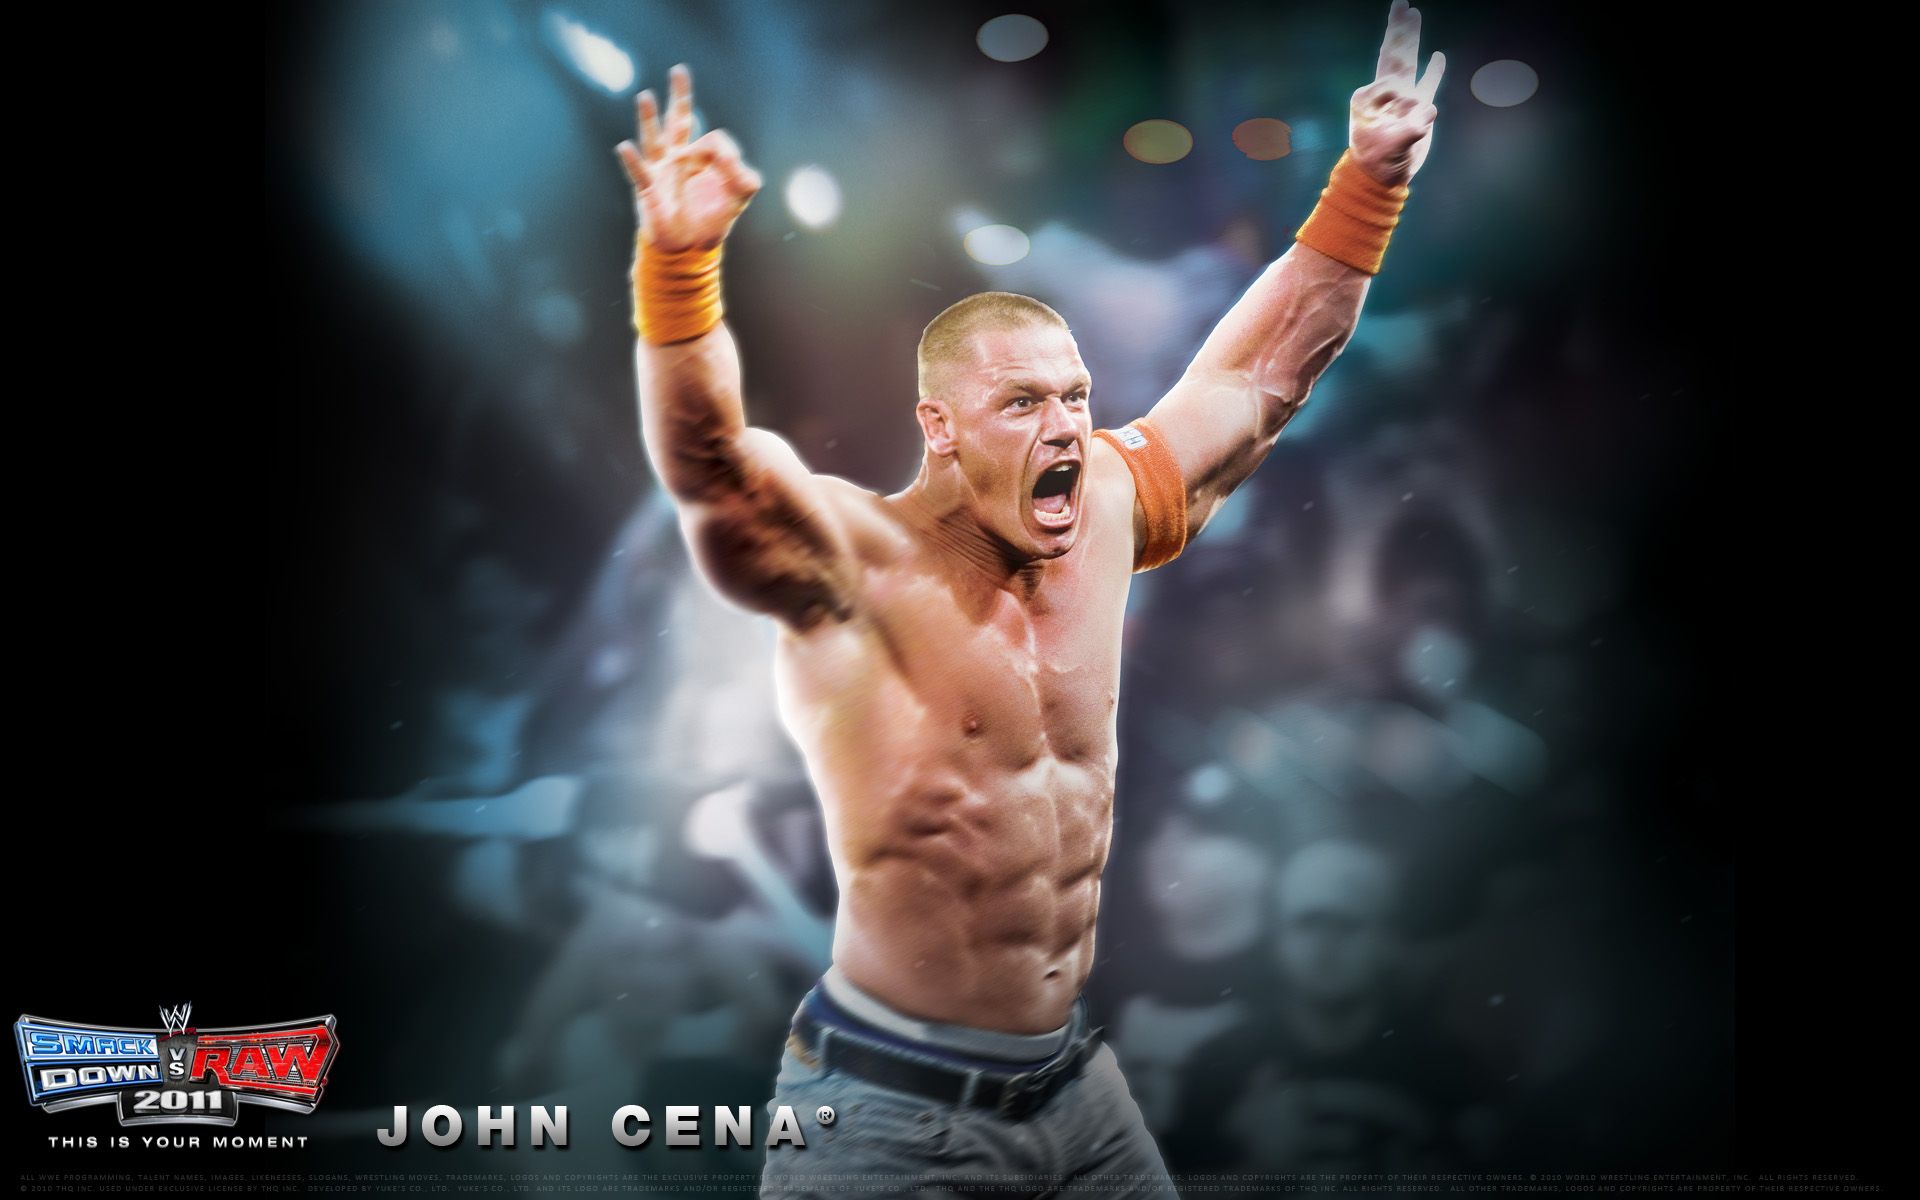 Wwe Smackdown Vs Raw 2011 John Cena Wallpaper